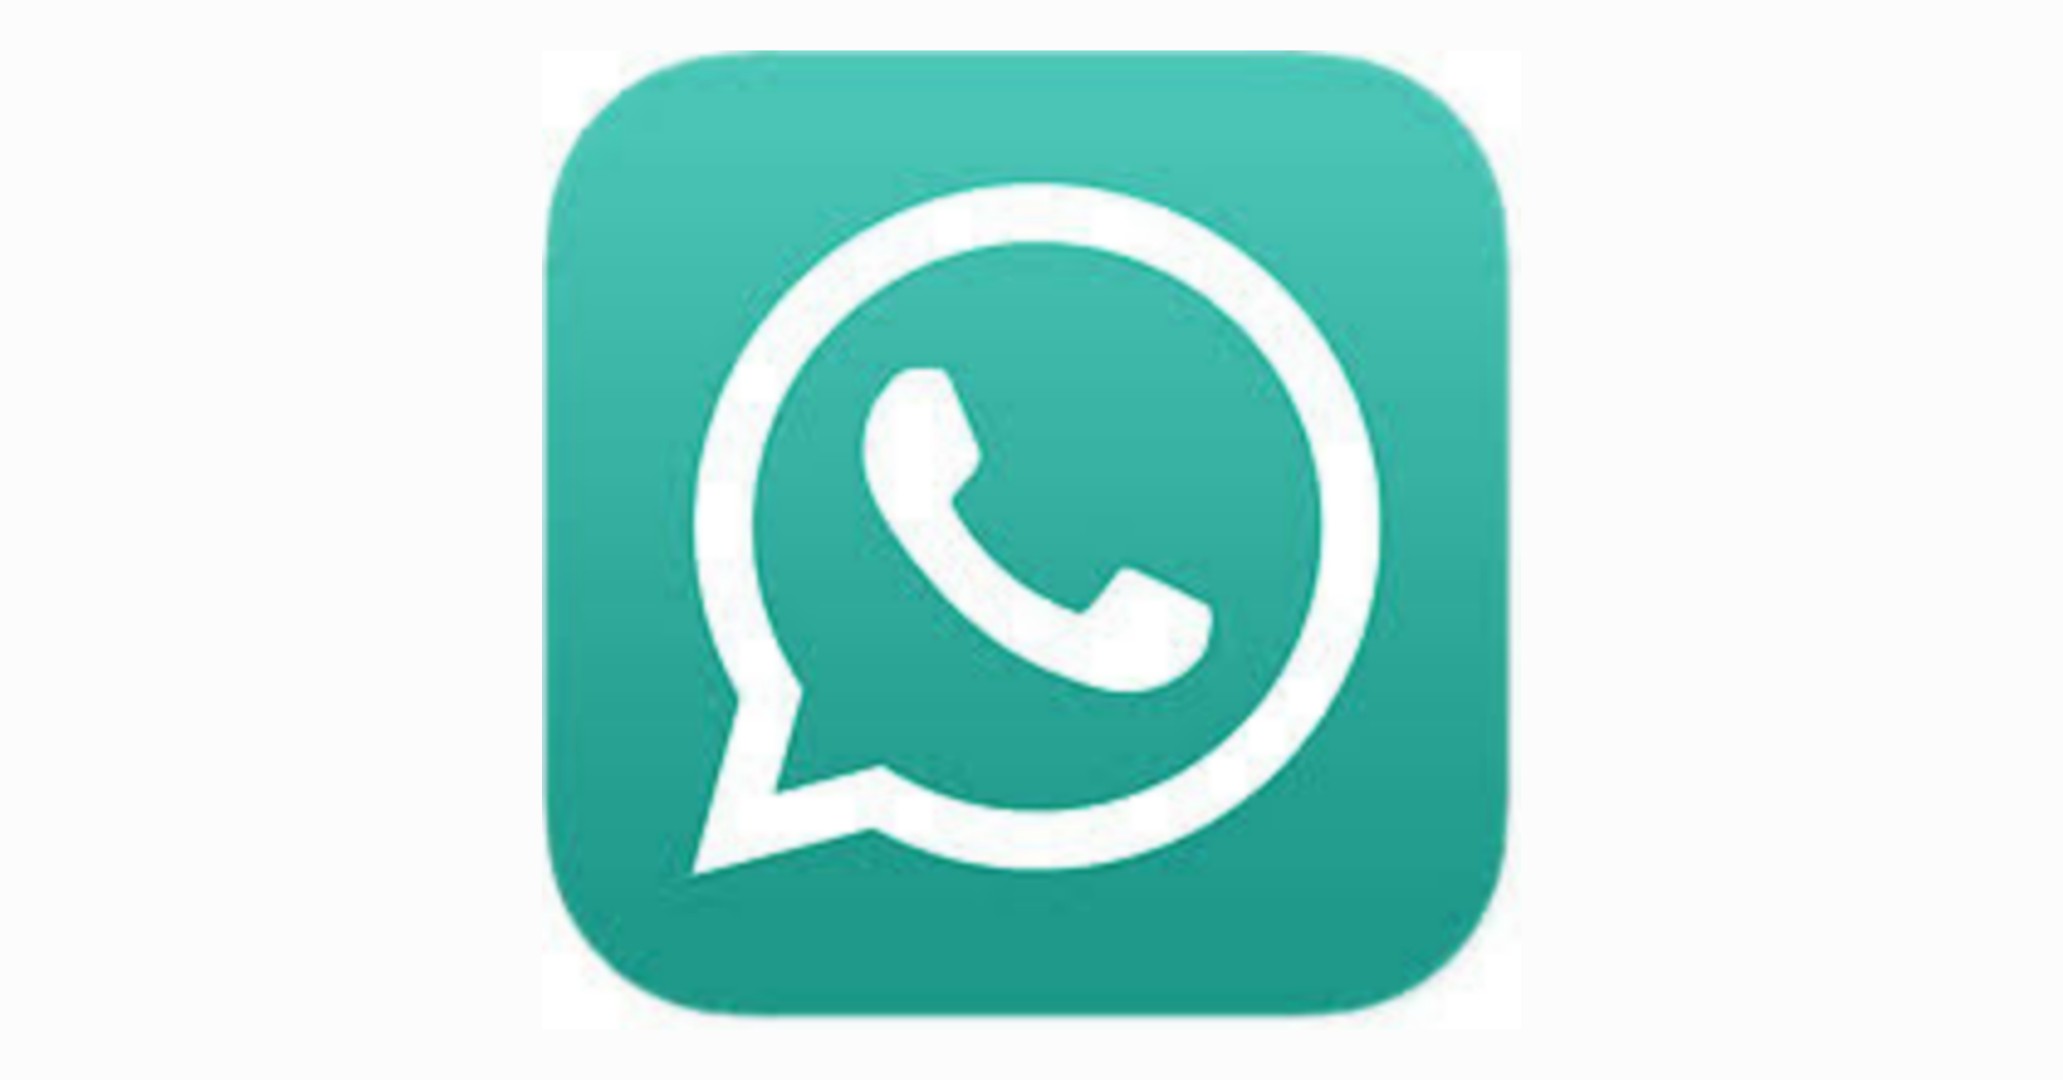 atualizar whatsapp gb 2021 atualizado download